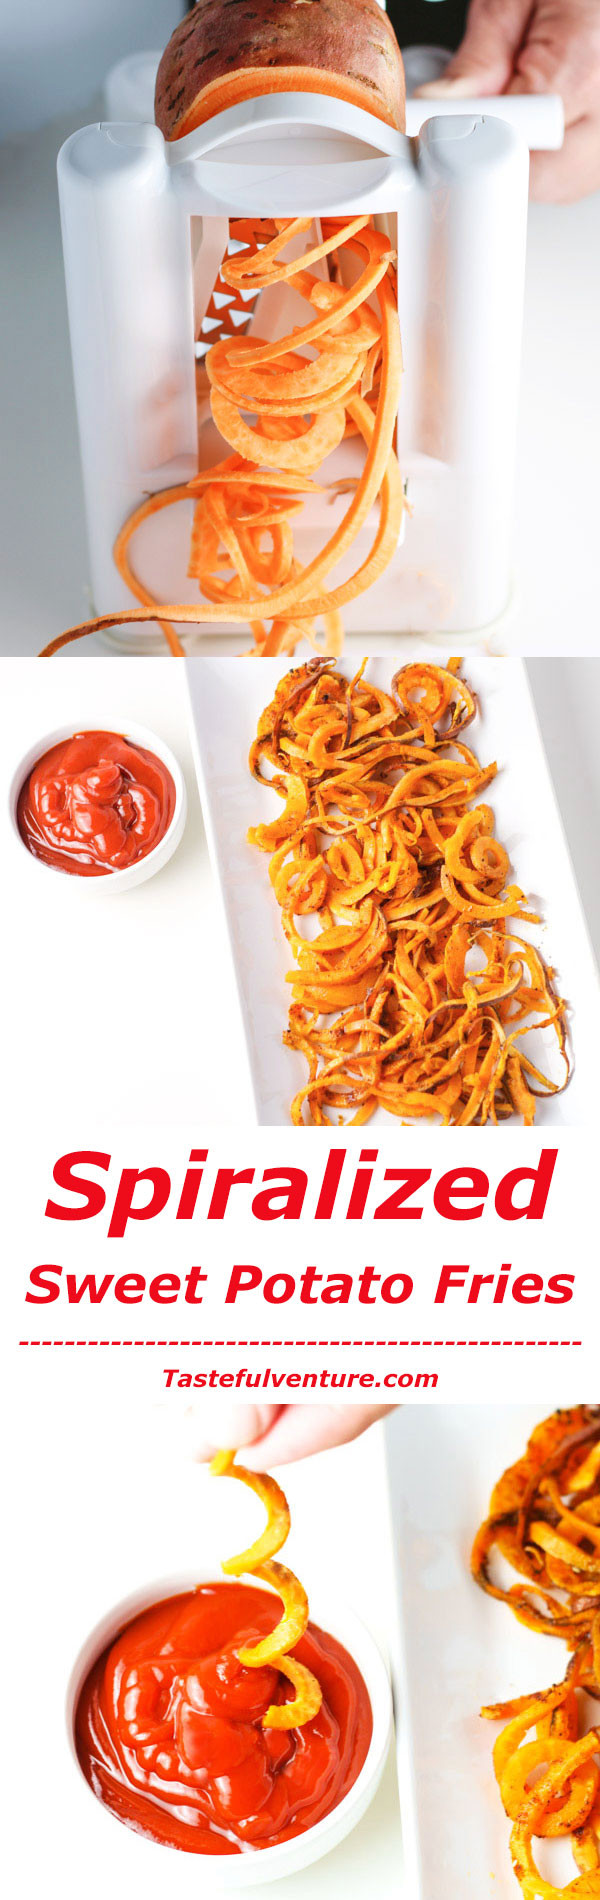 Spiralized Sweet Potato Fries
 Spiralized Sweet Potato Fries Tastefulventure